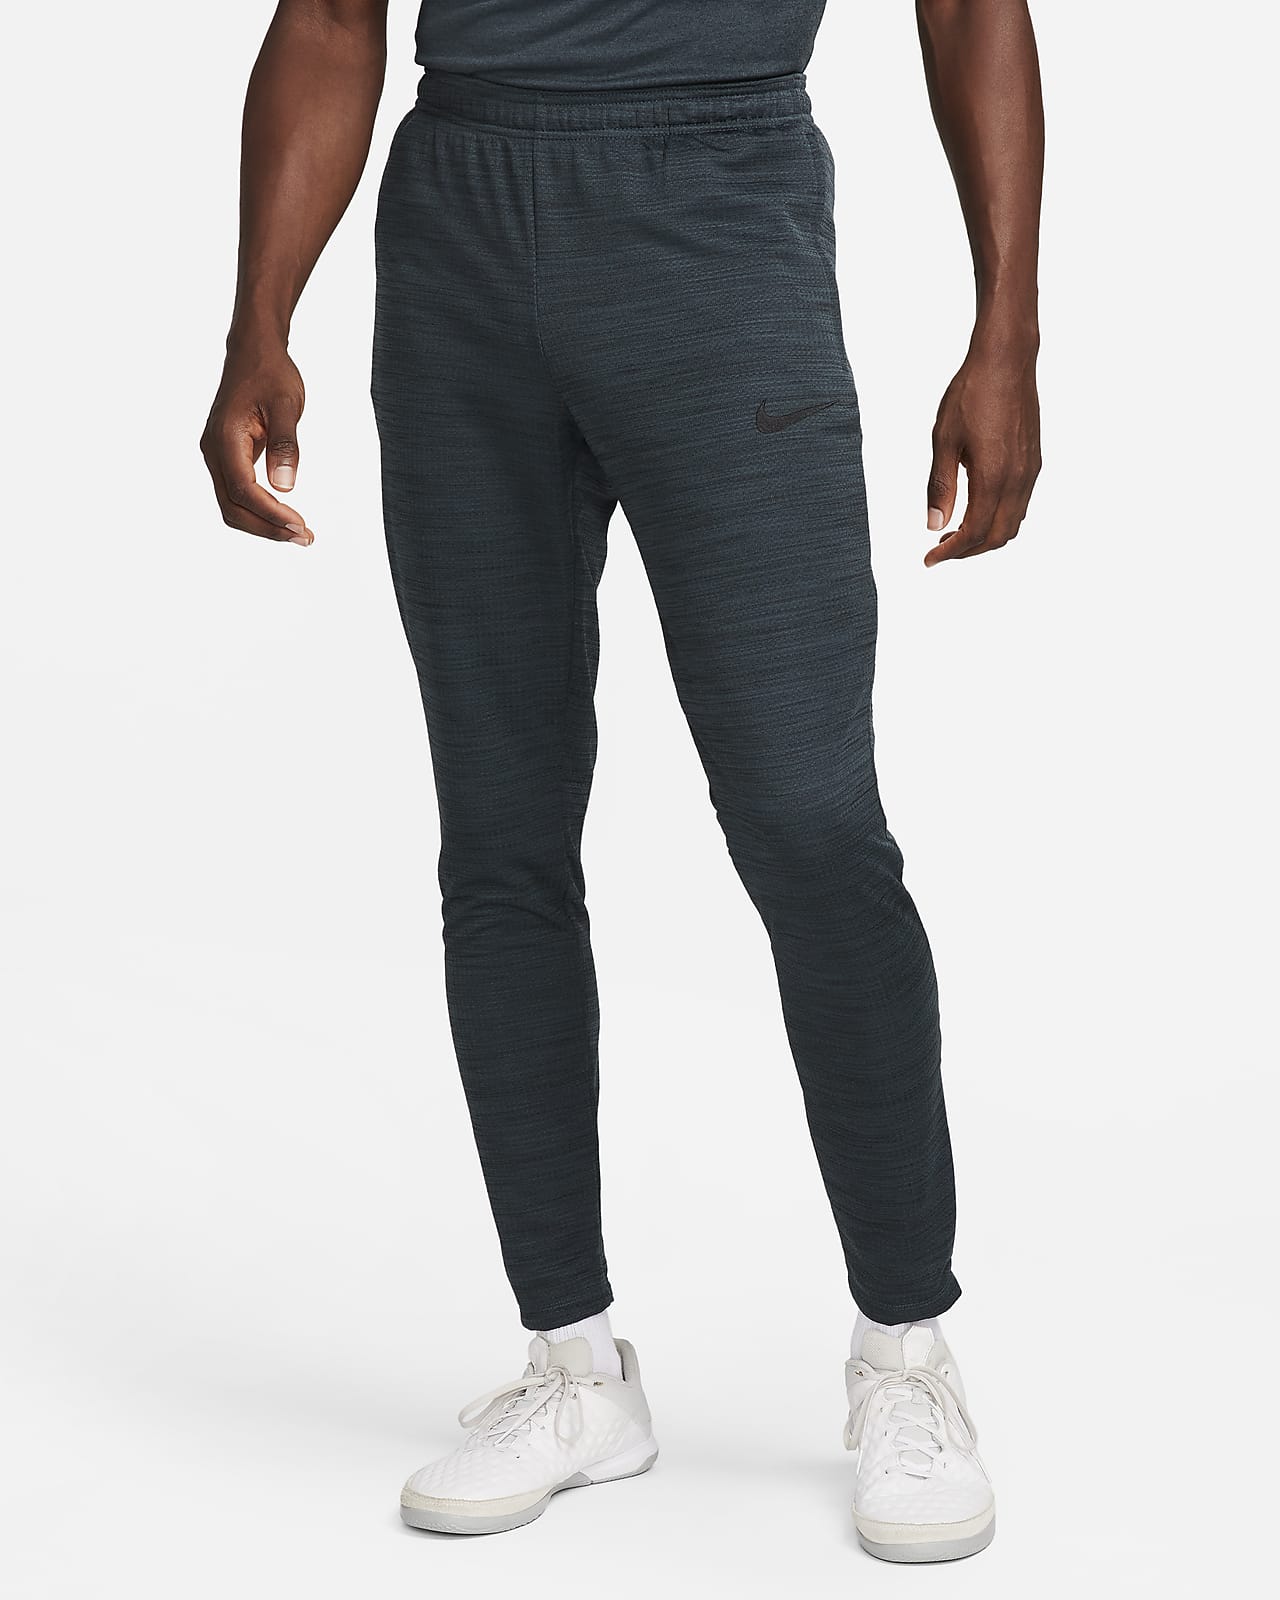 Black Solid Track Pants - Selling Fast at Pantaloons.com